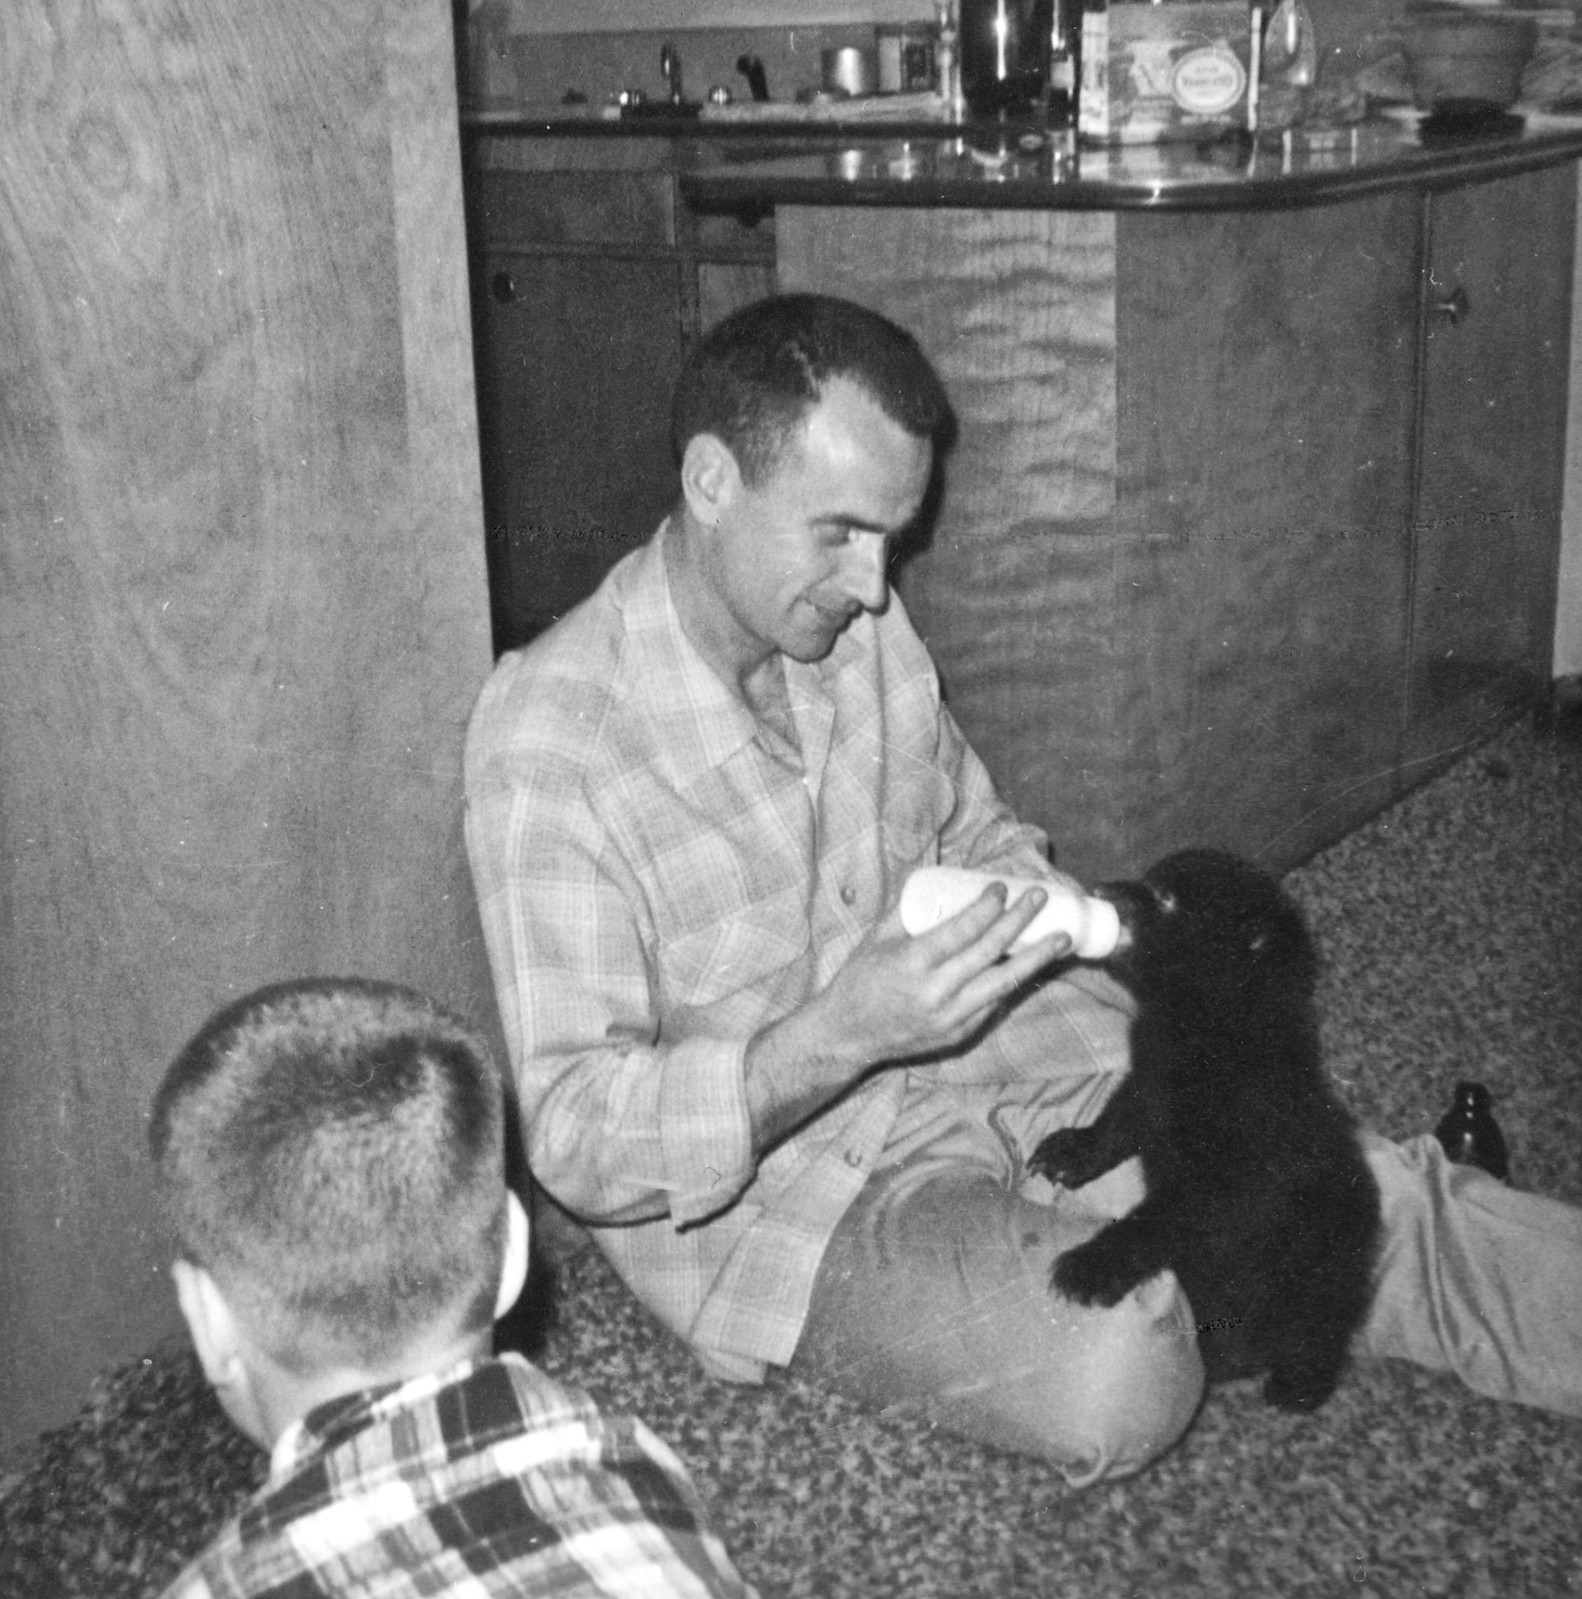 My father feeding a bear cub in our home, 1965.